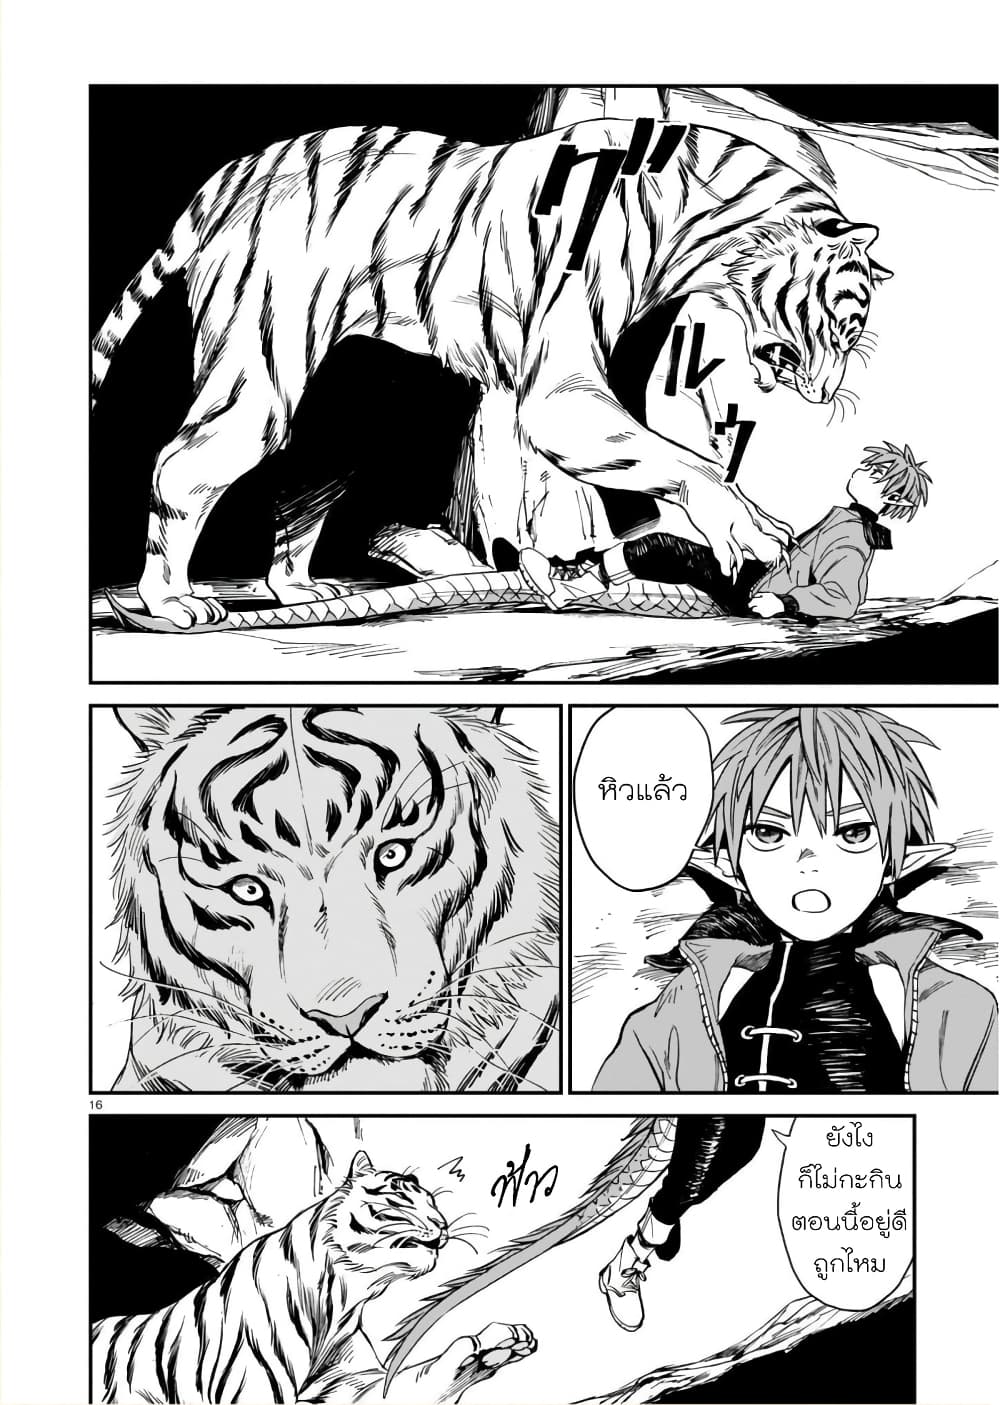 Tora ha Ryuu wo mada Tabenai โตเมื่อไร จับหม่ำ 1-เหยื่อของเสือ